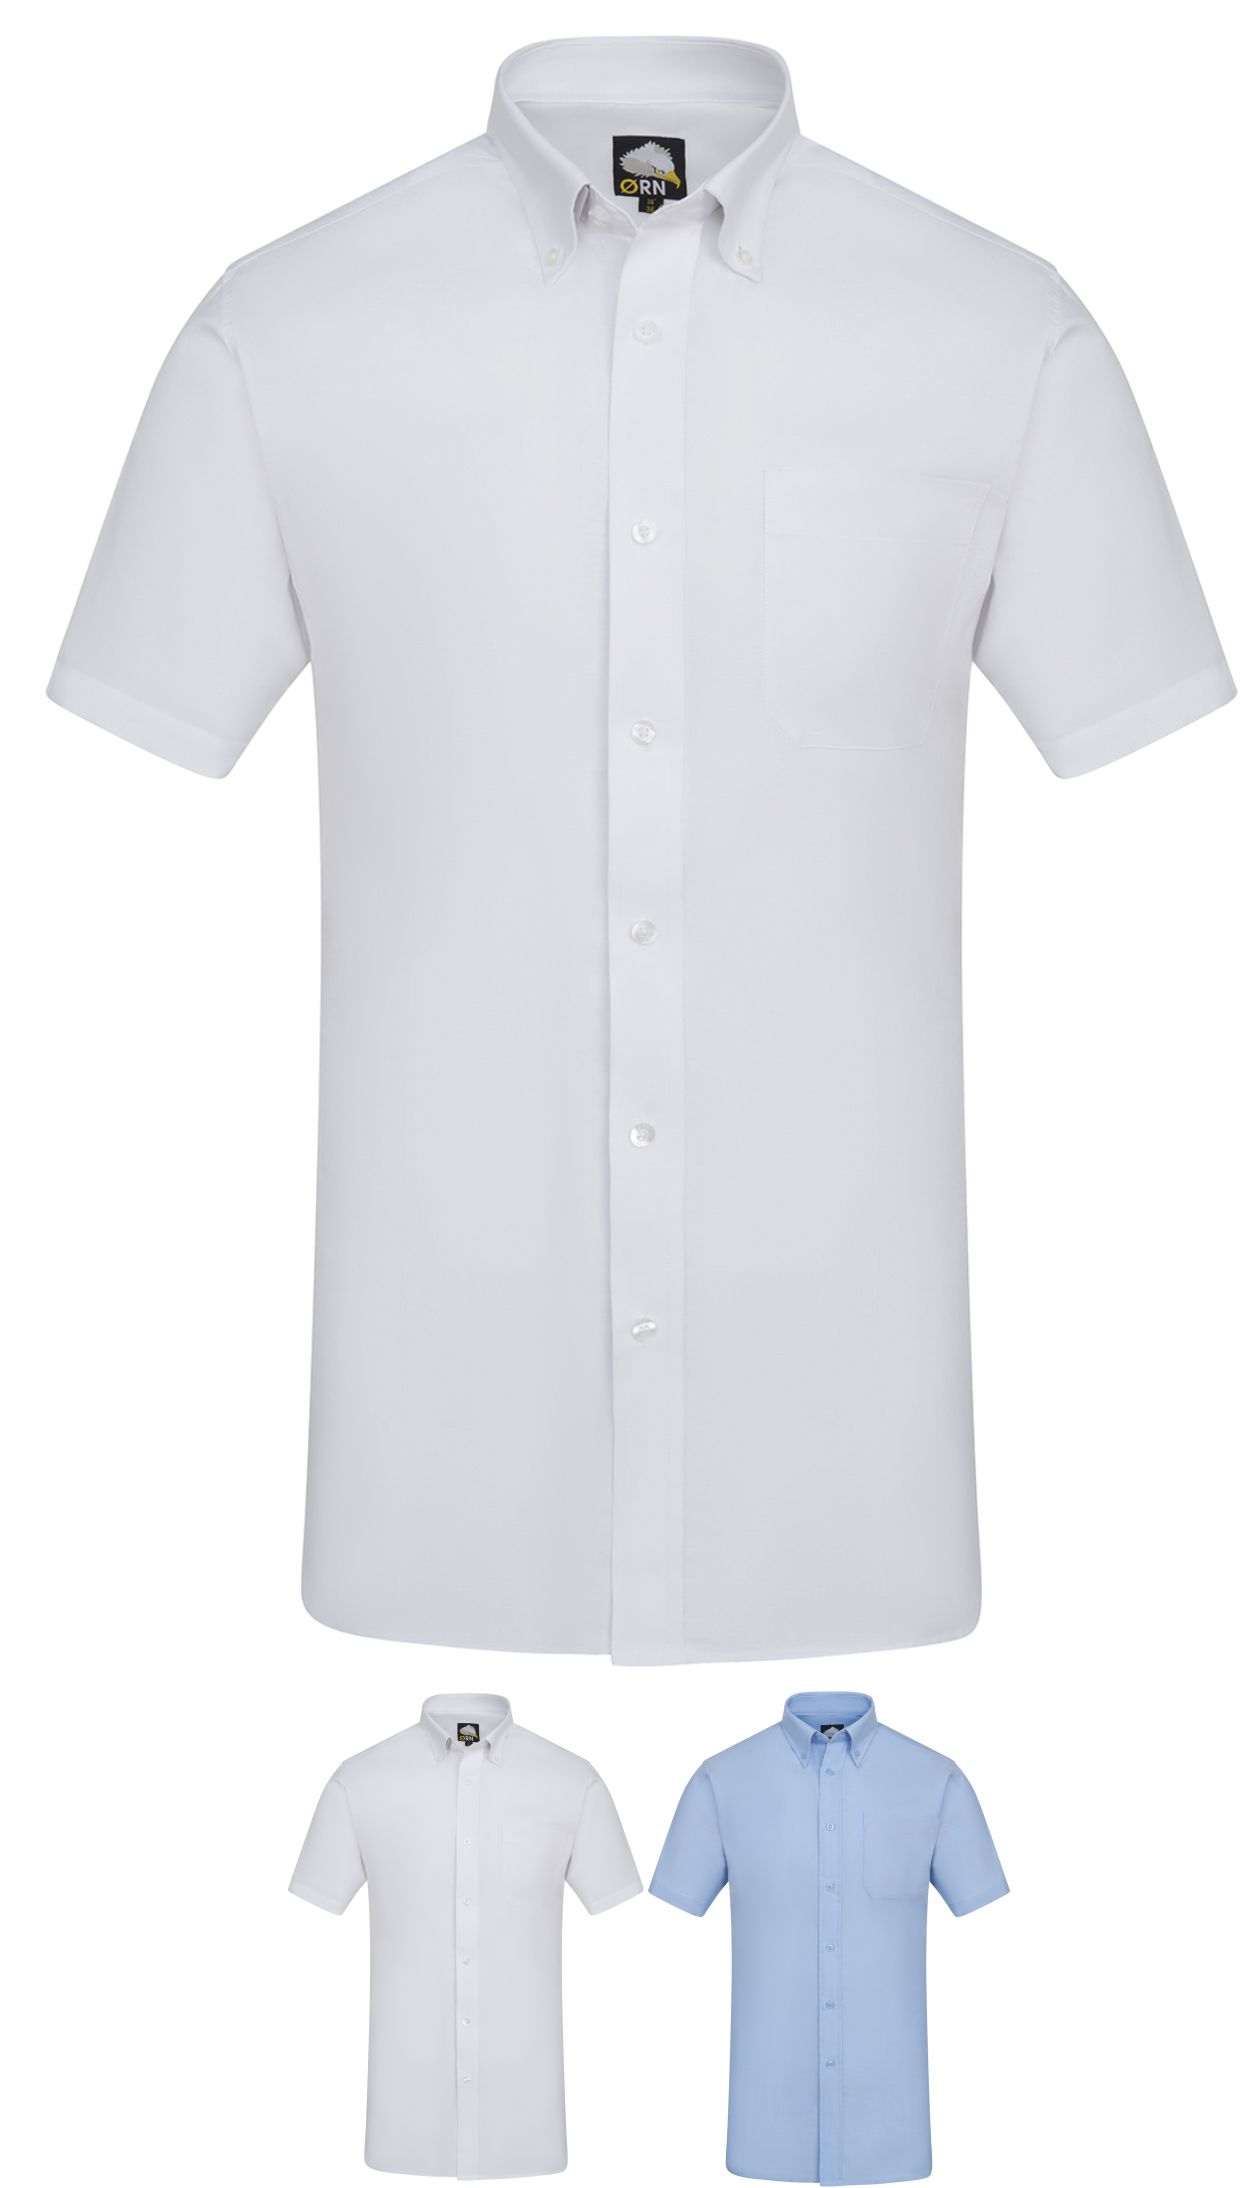 Orn 5510 Essential Long Sleeve Oxford Shirt